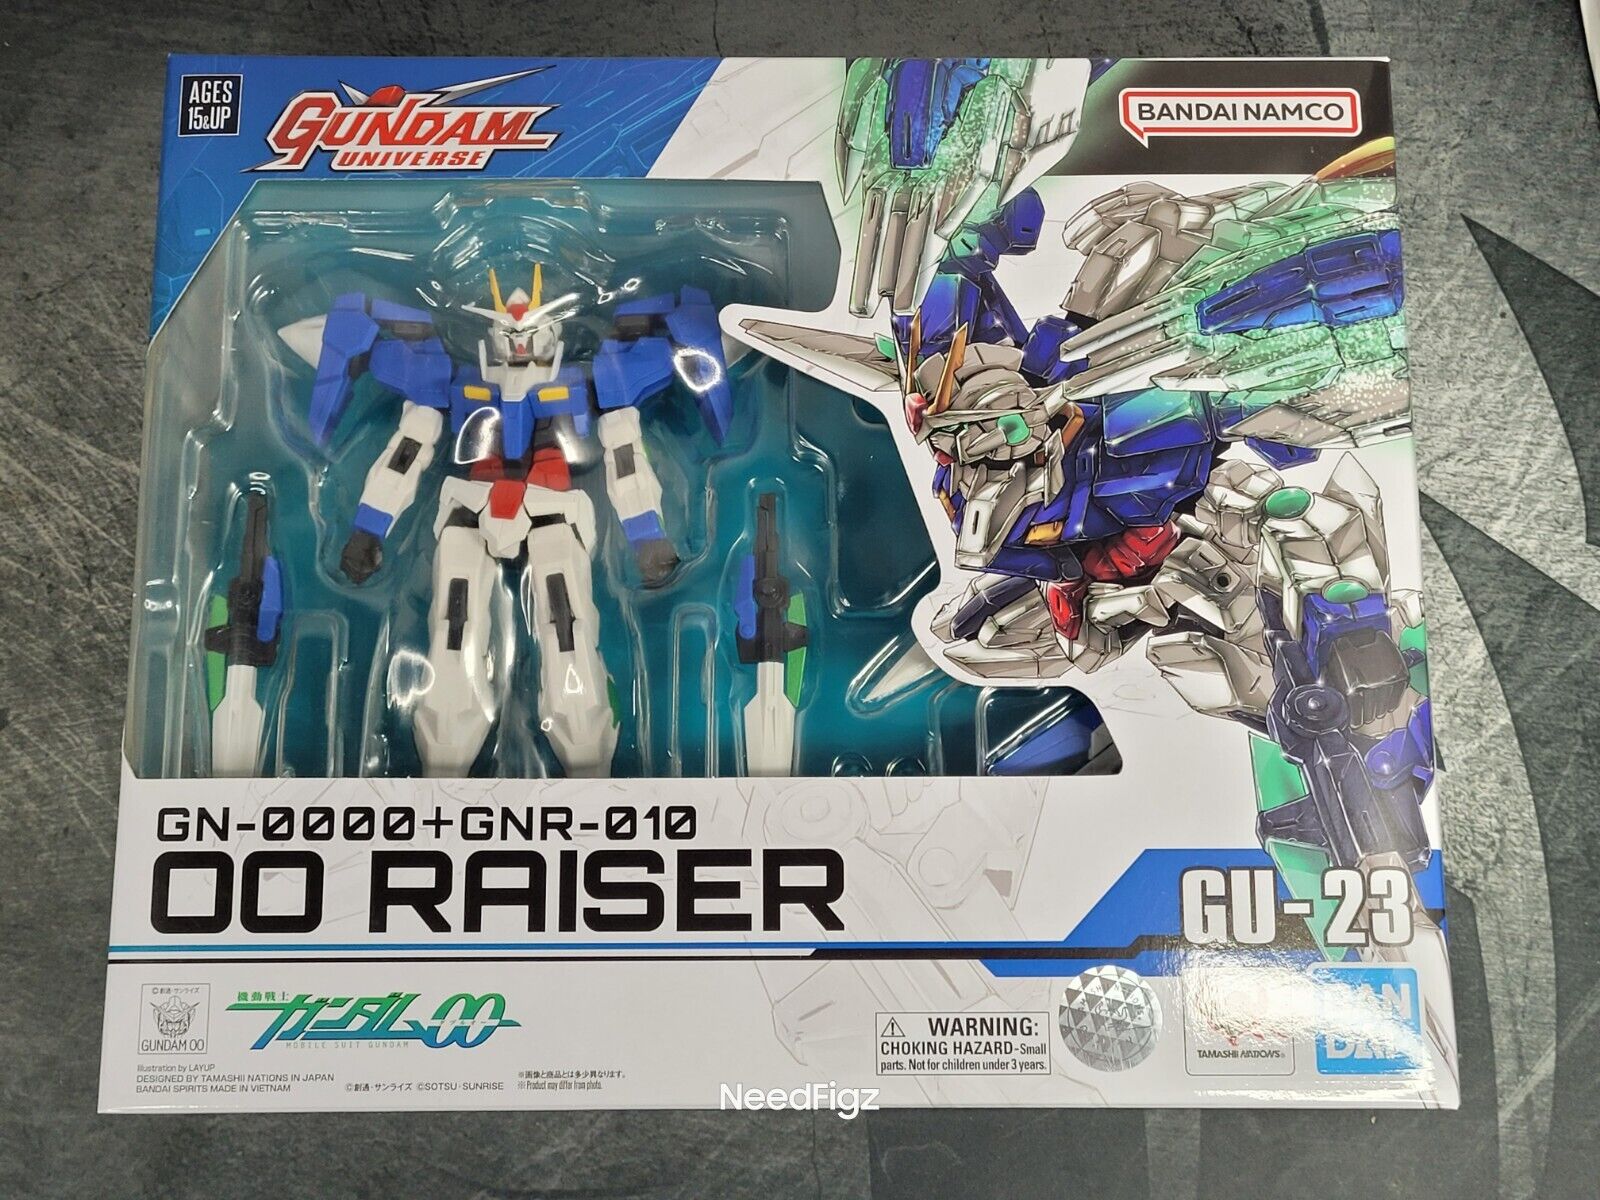 Gundam Universe GN-0000+GNR-010 00 Raiser GU-23 BANDAI Authentic - US Seller New